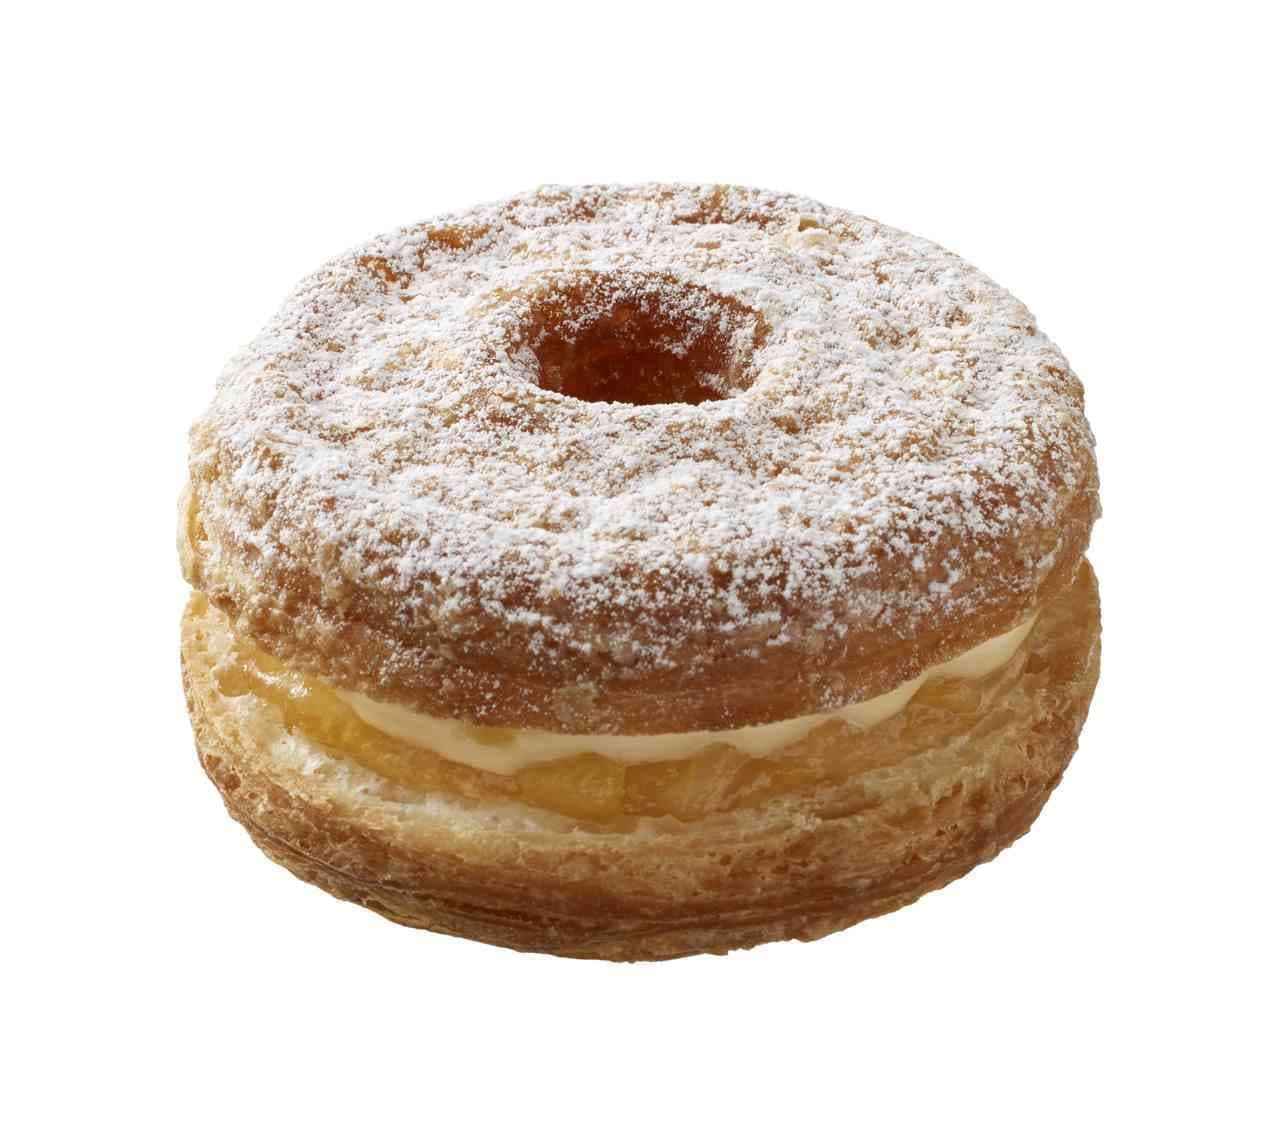 MISS-DO "misdo meets BAKE INC. 1st" "Apple Croissant Donut with Lemon Custard".